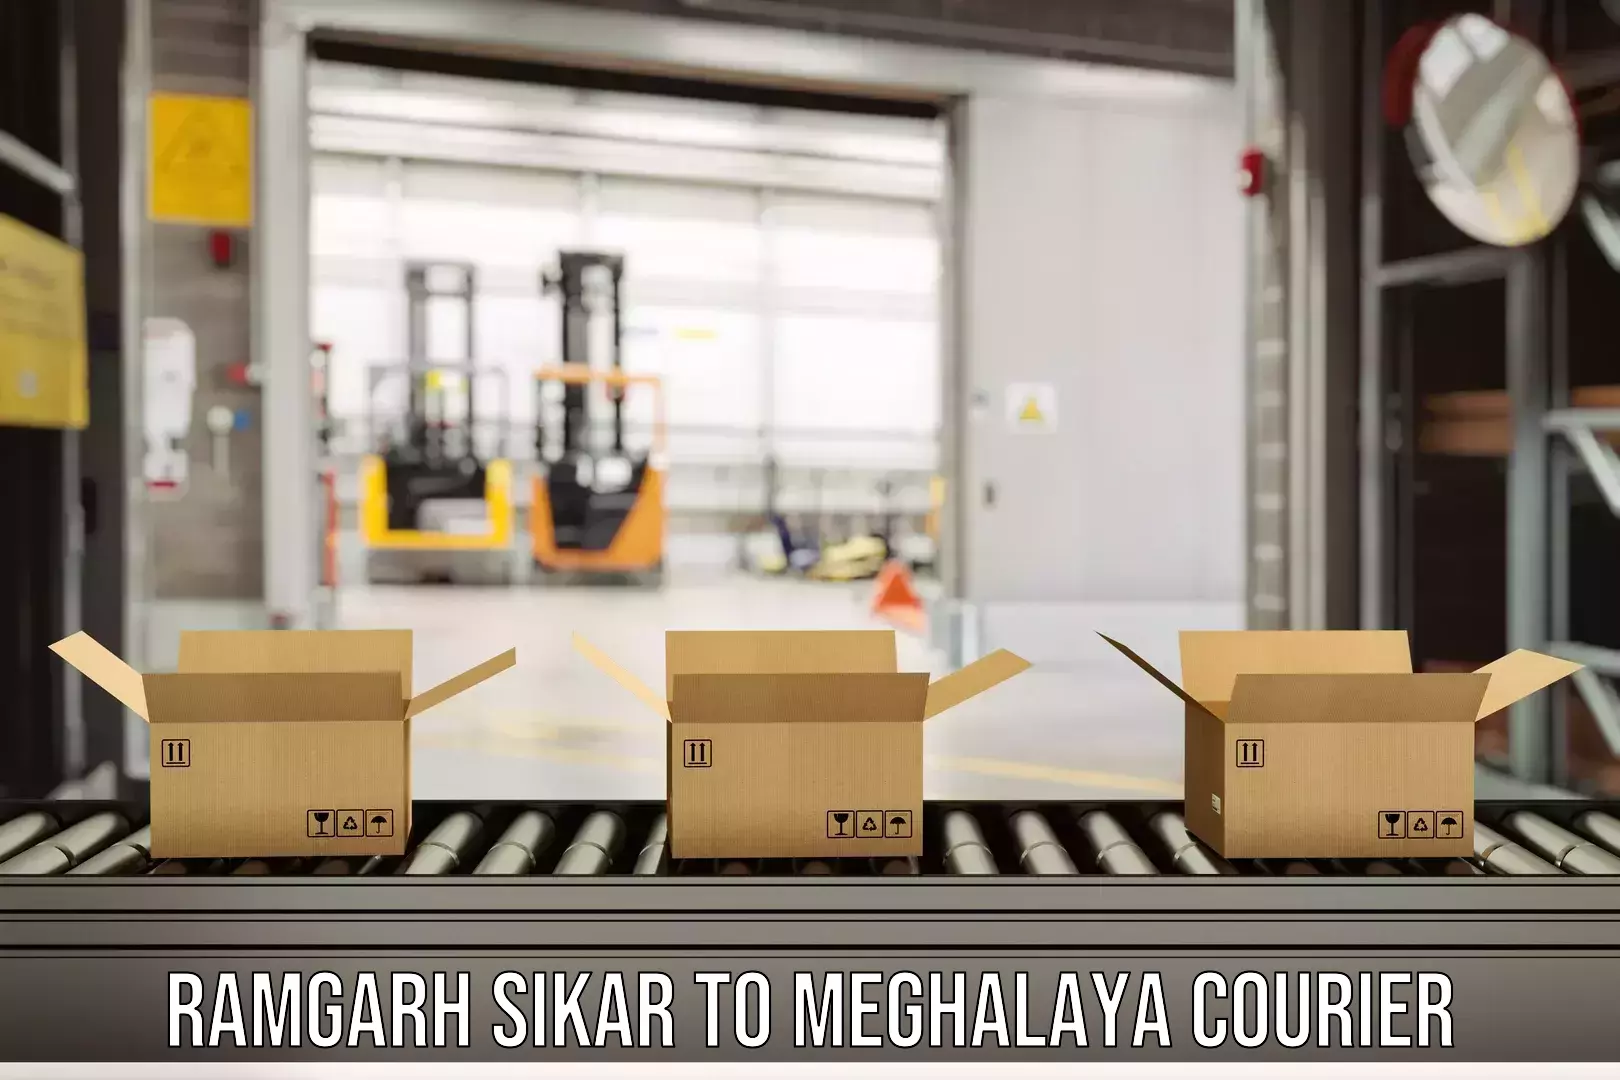 Doorstep delivery service Ramgarh Sikar to Meghalaya